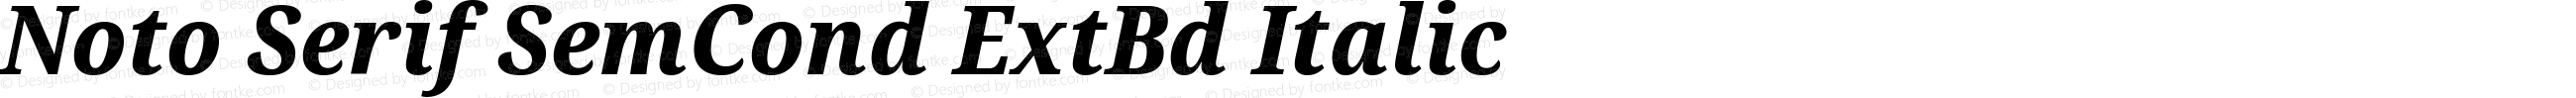 Noto Serif SemiCondensed ExtraBold Italic